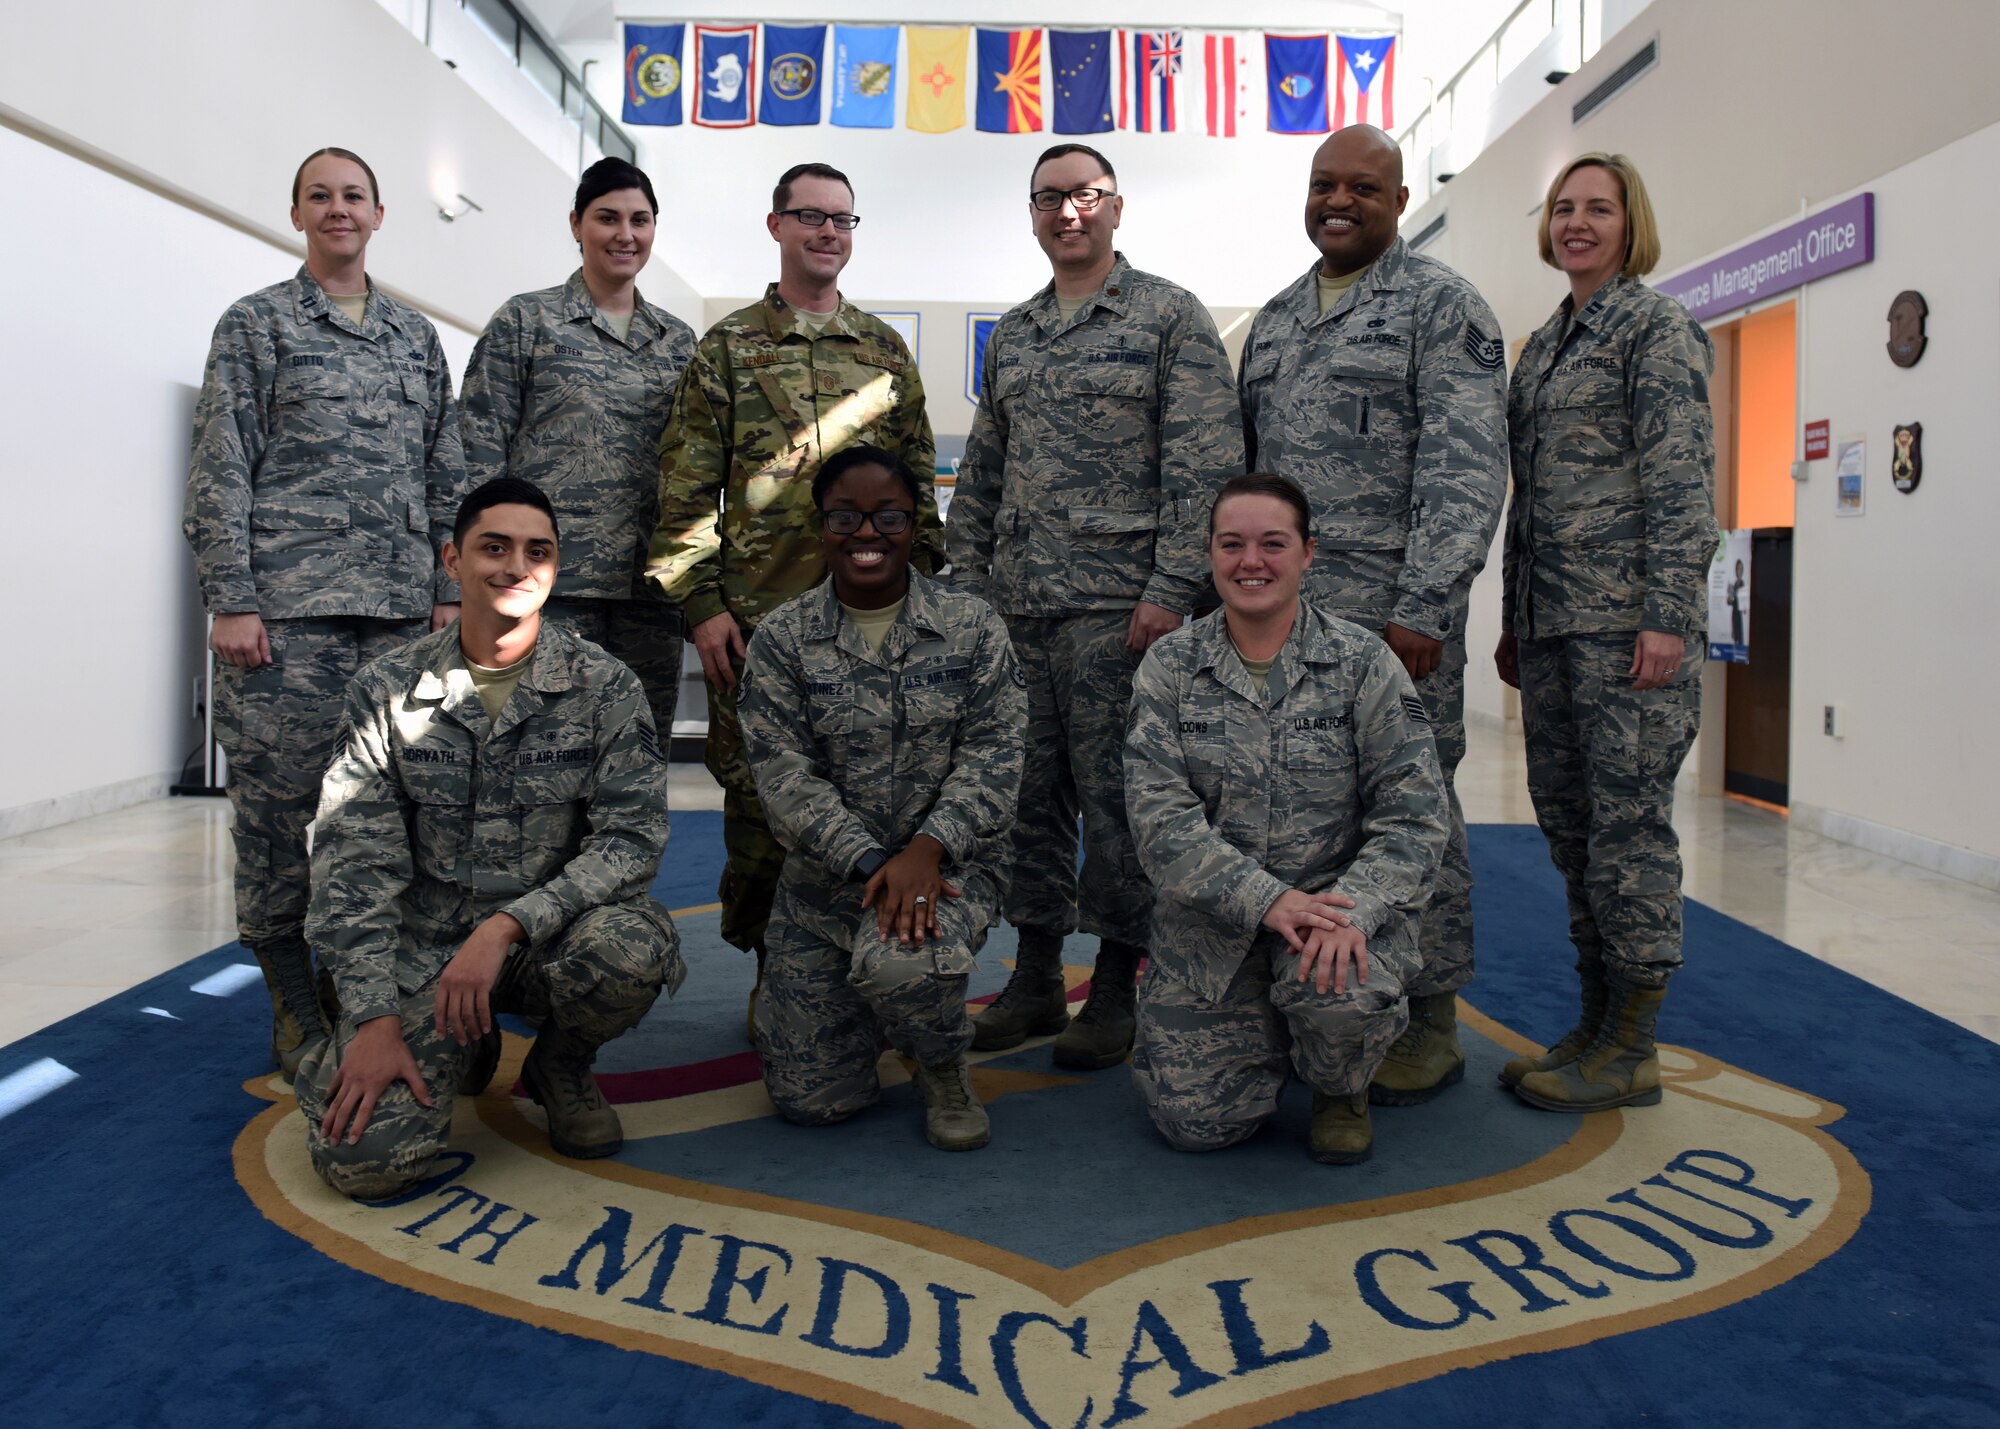 Nine mental health Airmen in a group photo.